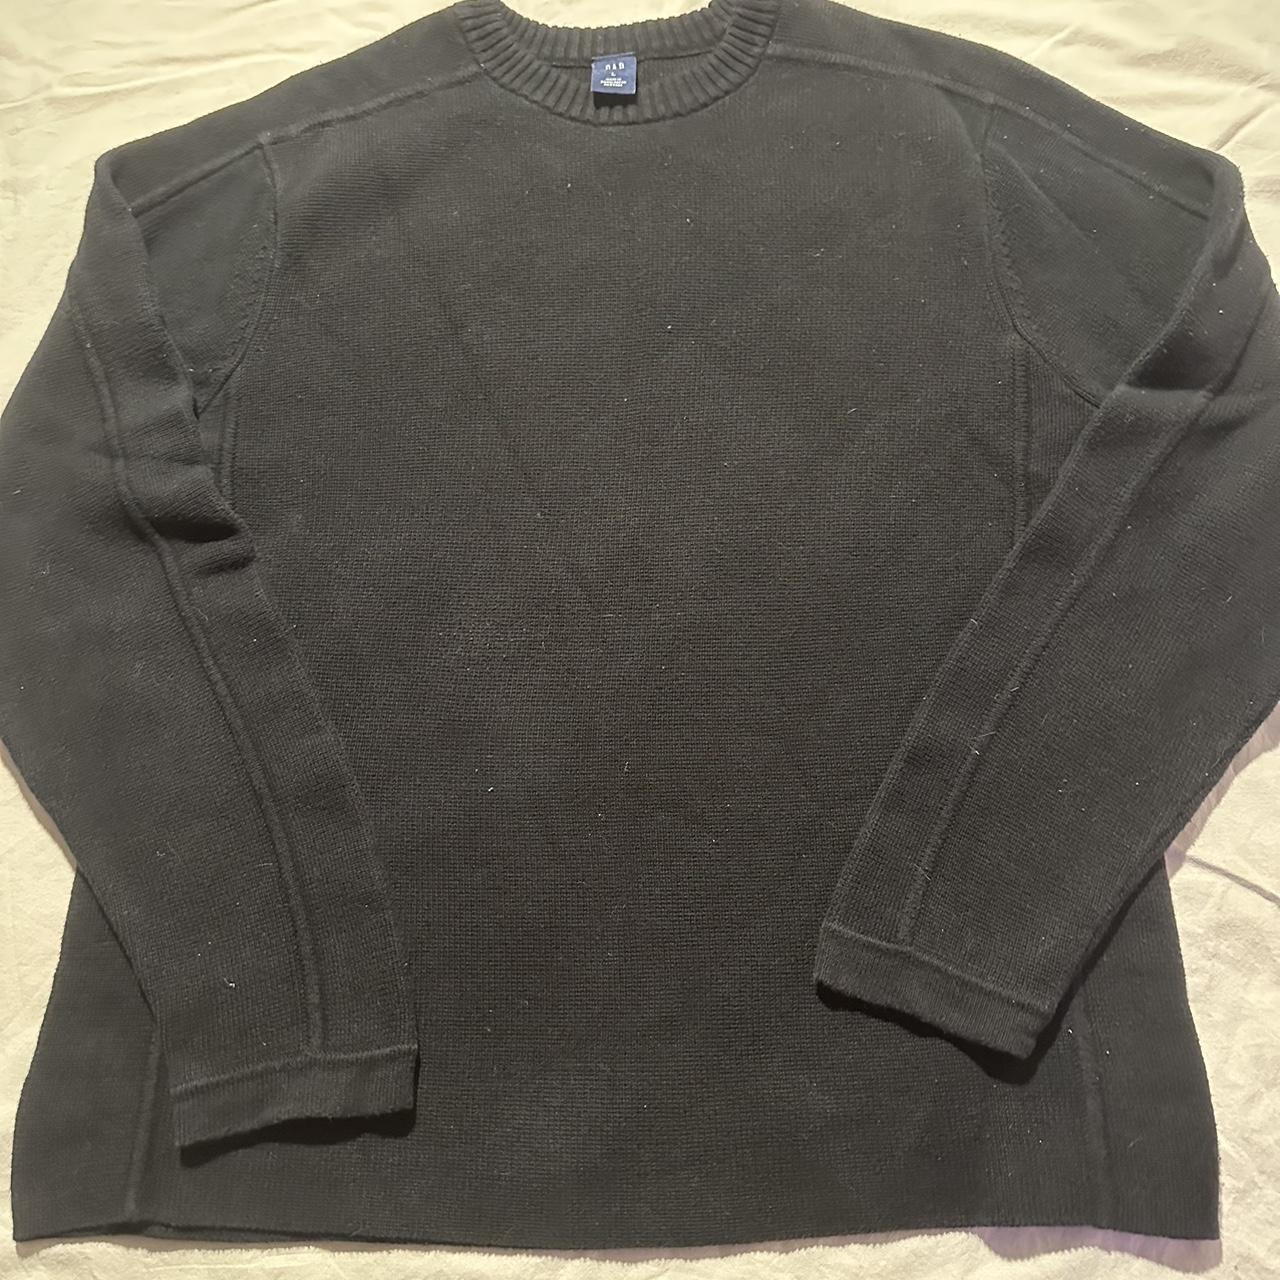 Gap sweater #90s #vintagesweater #grunge #skater... - Depop